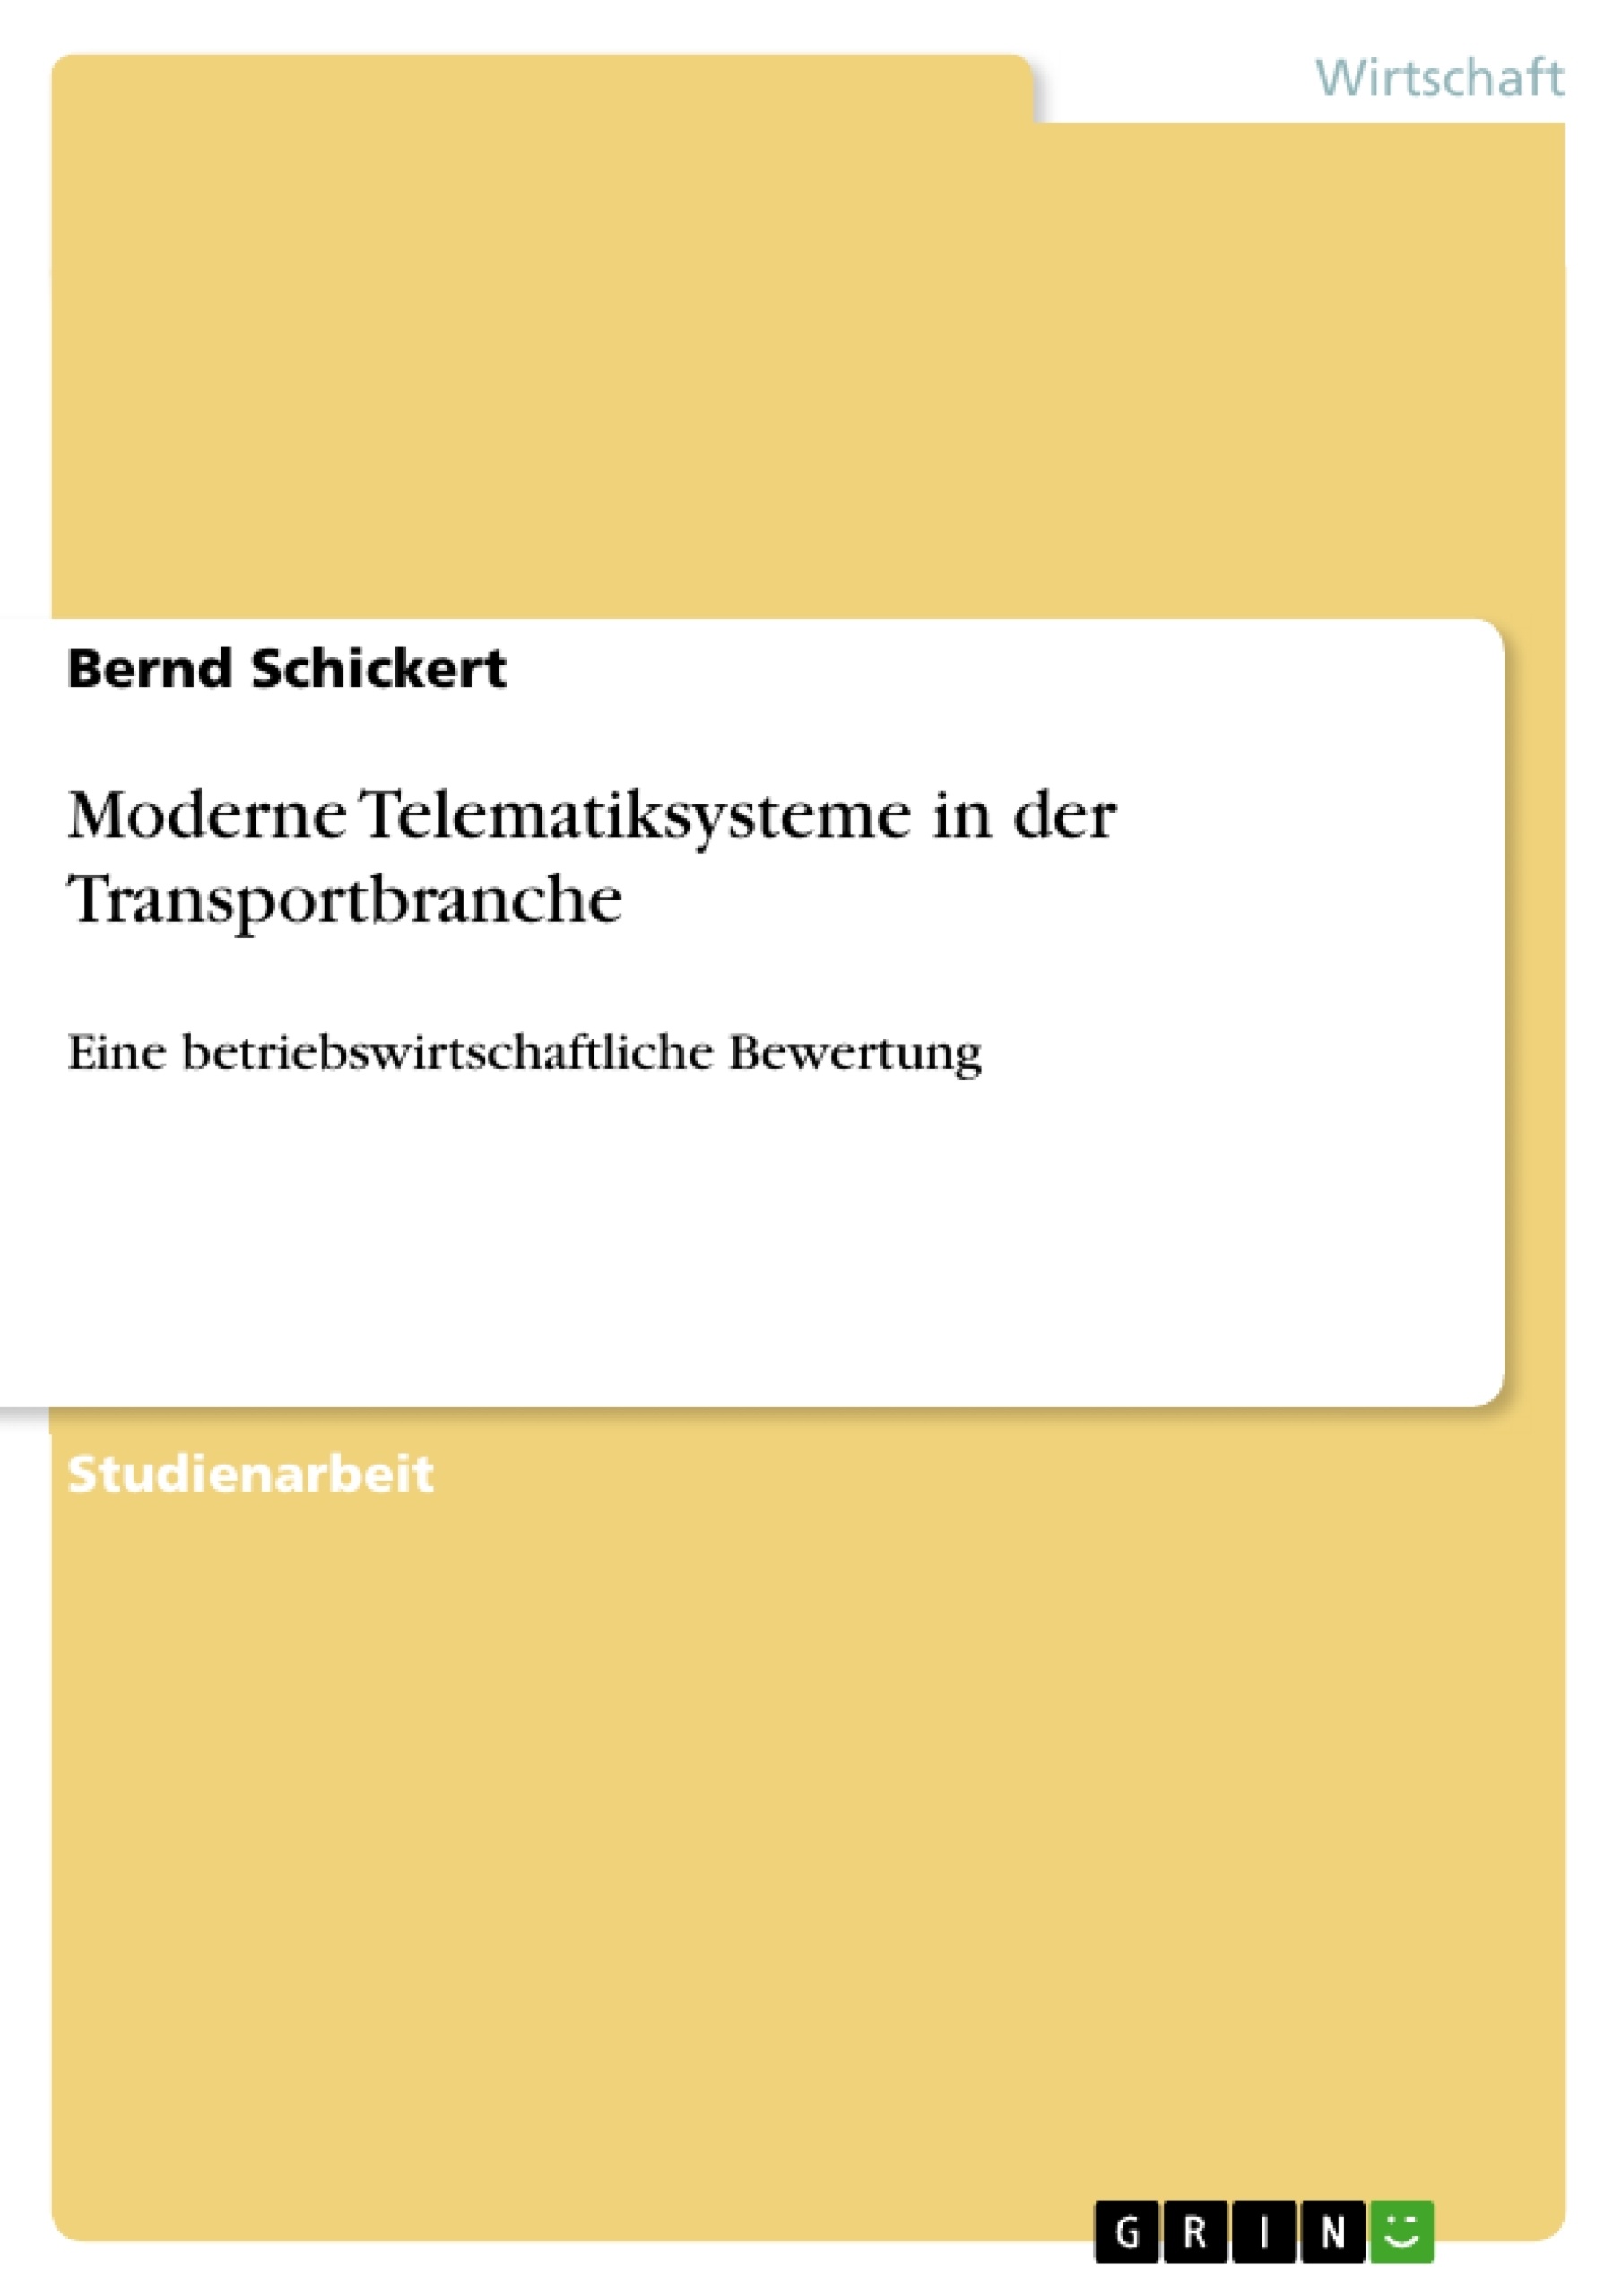 Titre: Moderne Telematiksysteme in der Transportbranche